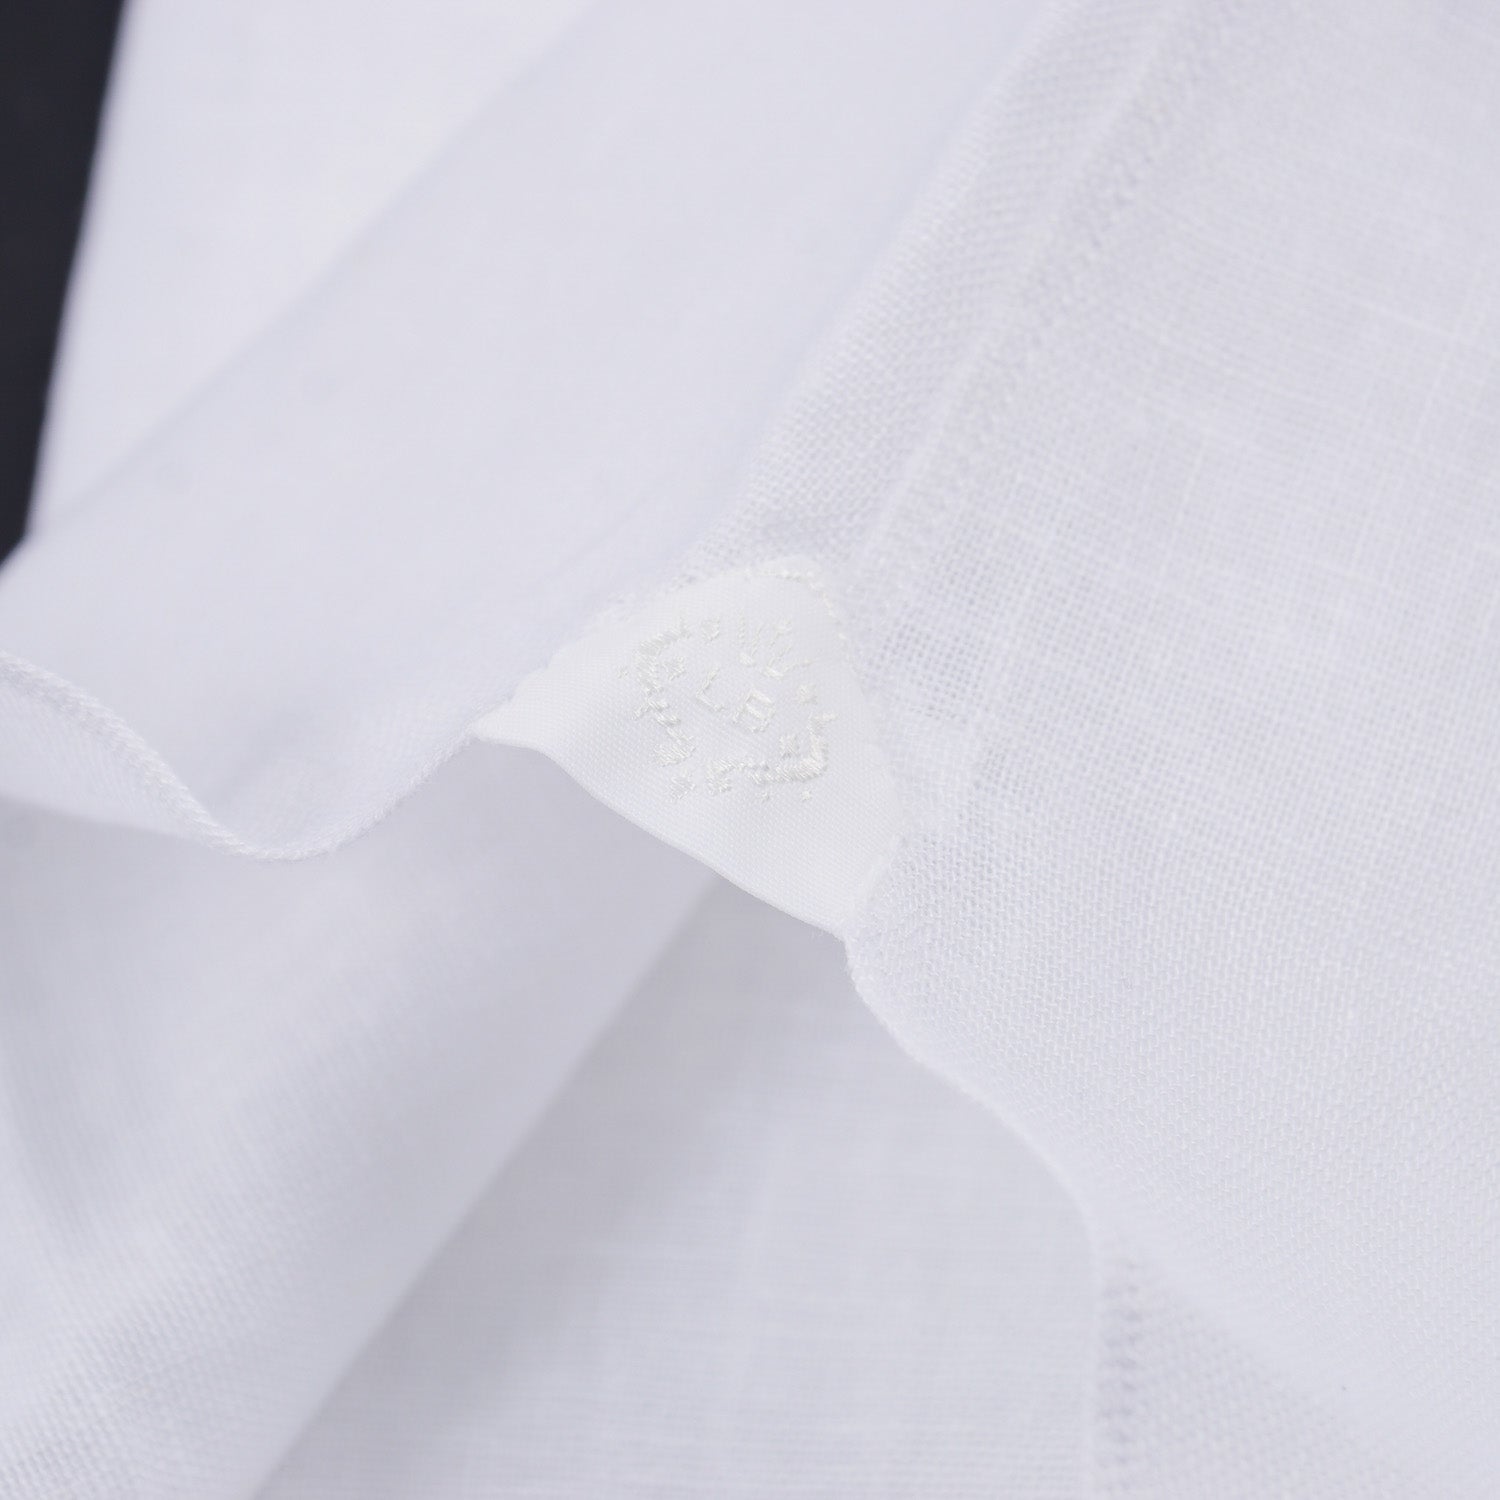 Luigi Borrelli Linen and Cotton Dress Shirt - Top Shelf Apparel